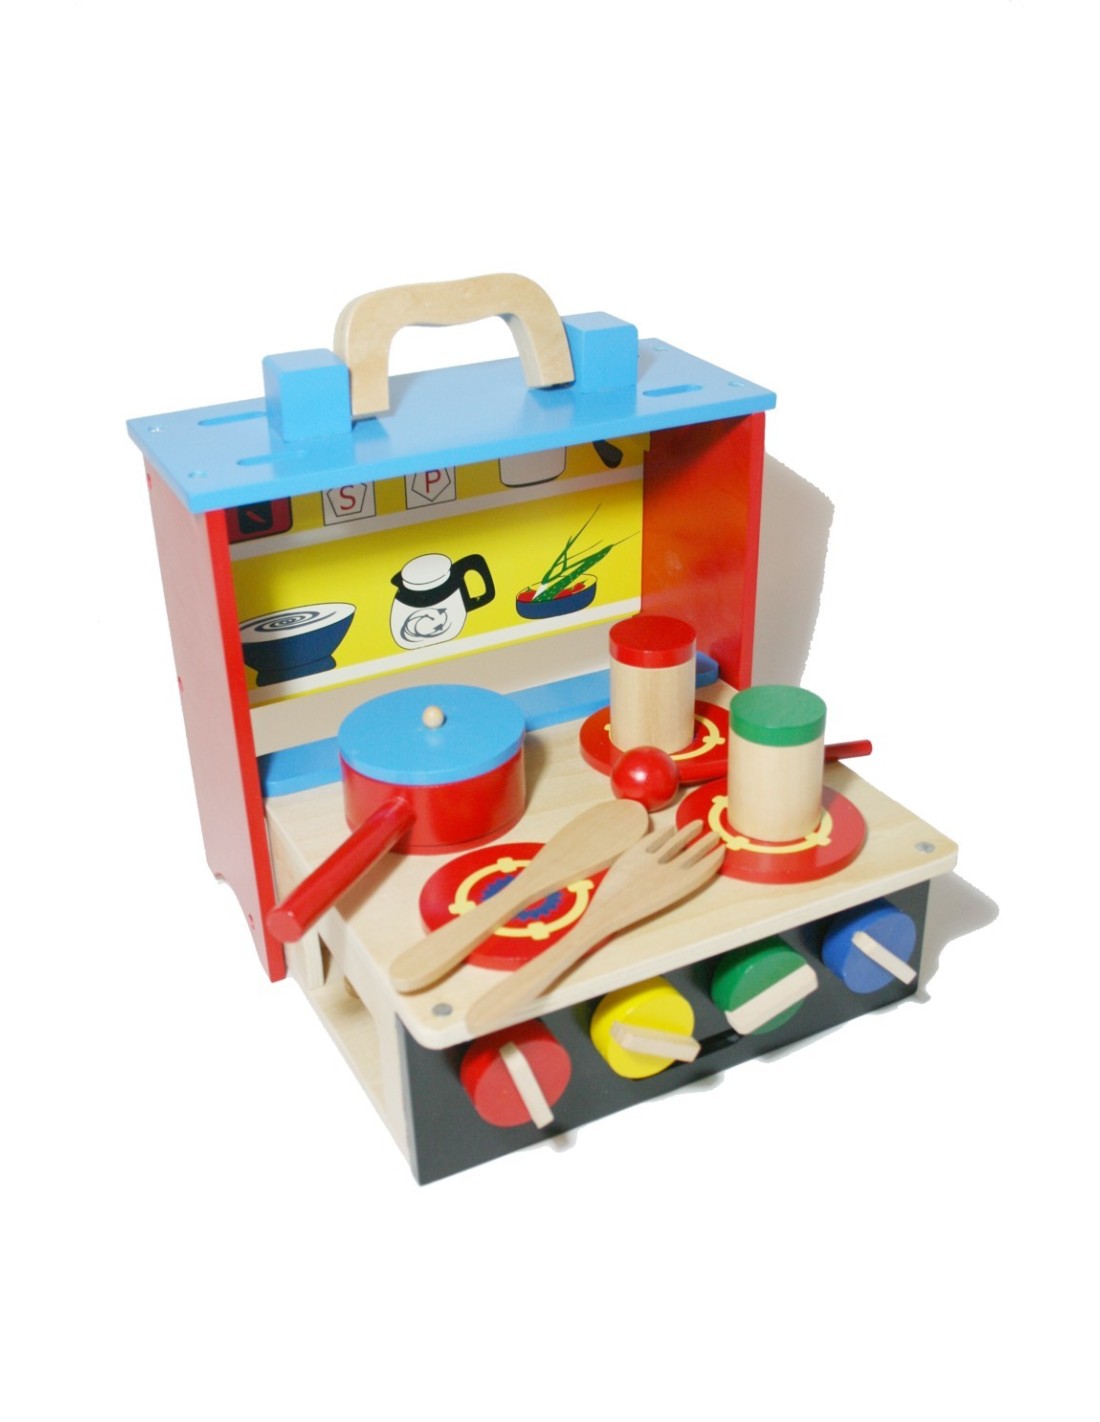 Cocina portátil de madera infantil de juguete con accesorios